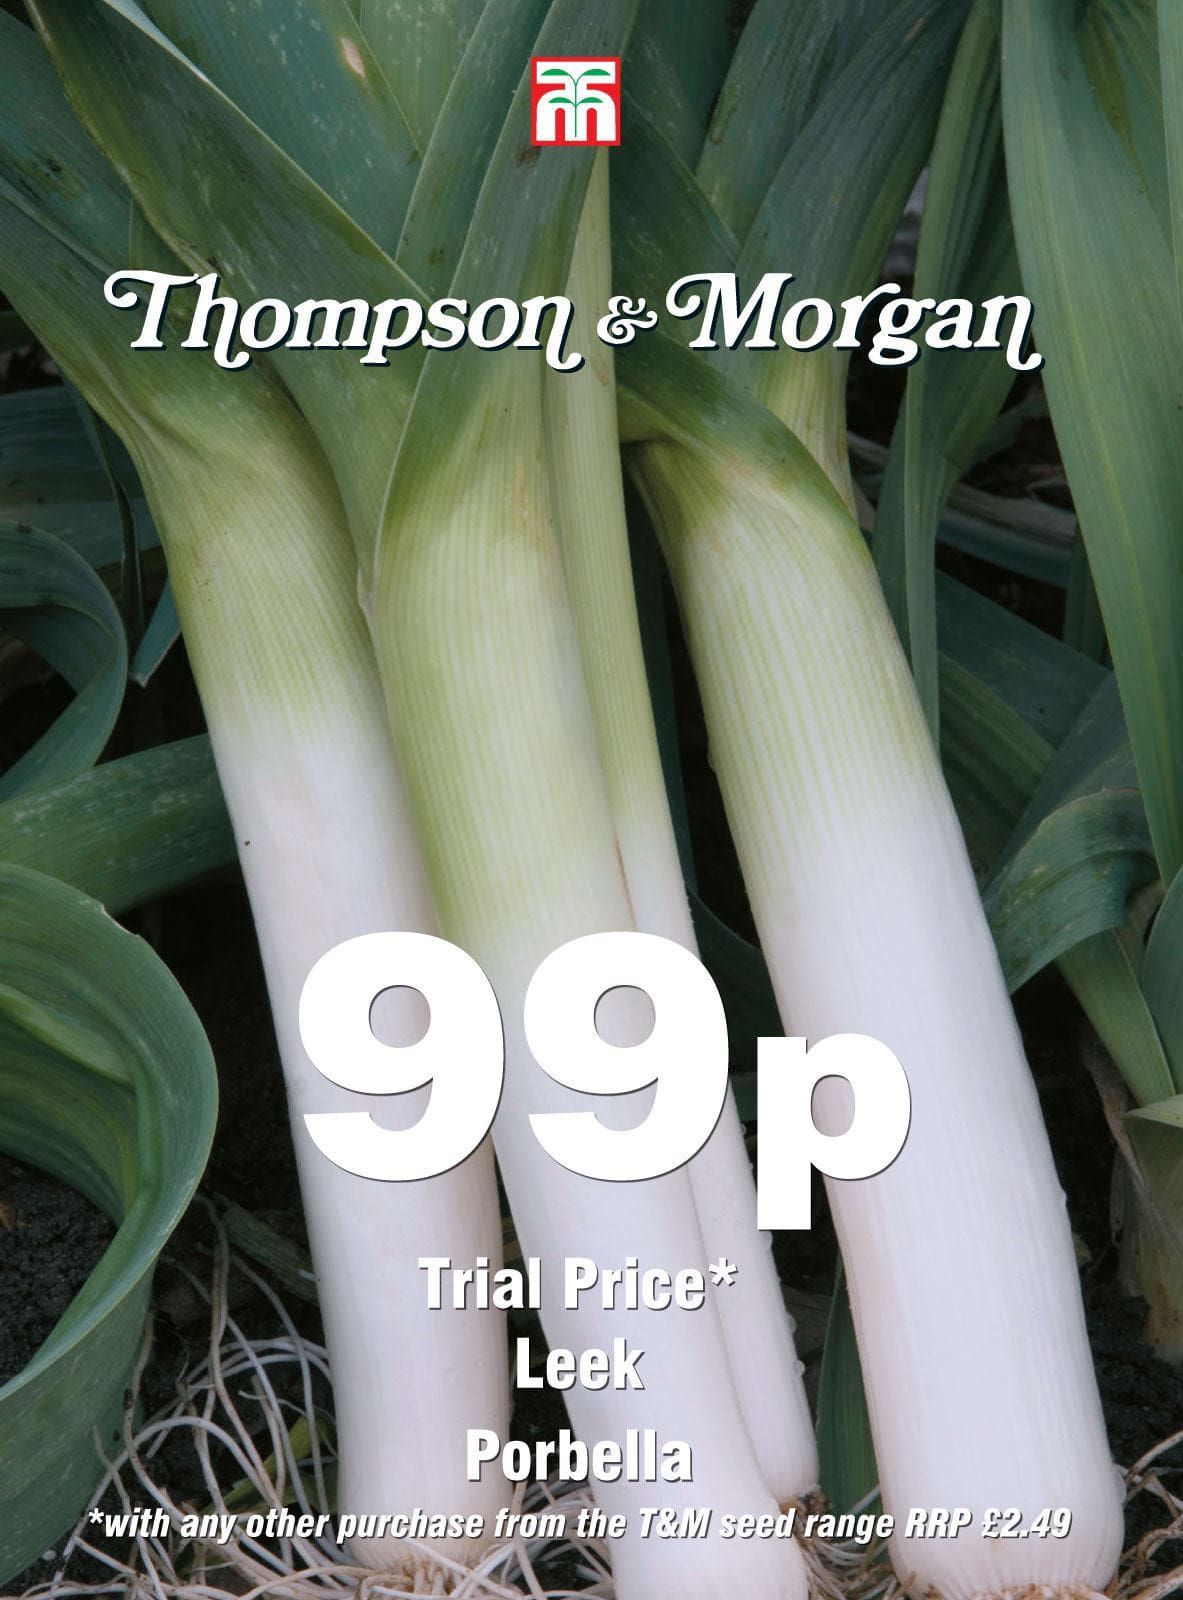 Thompson & Morgan Leek Porbella 50 Seed Only 99p